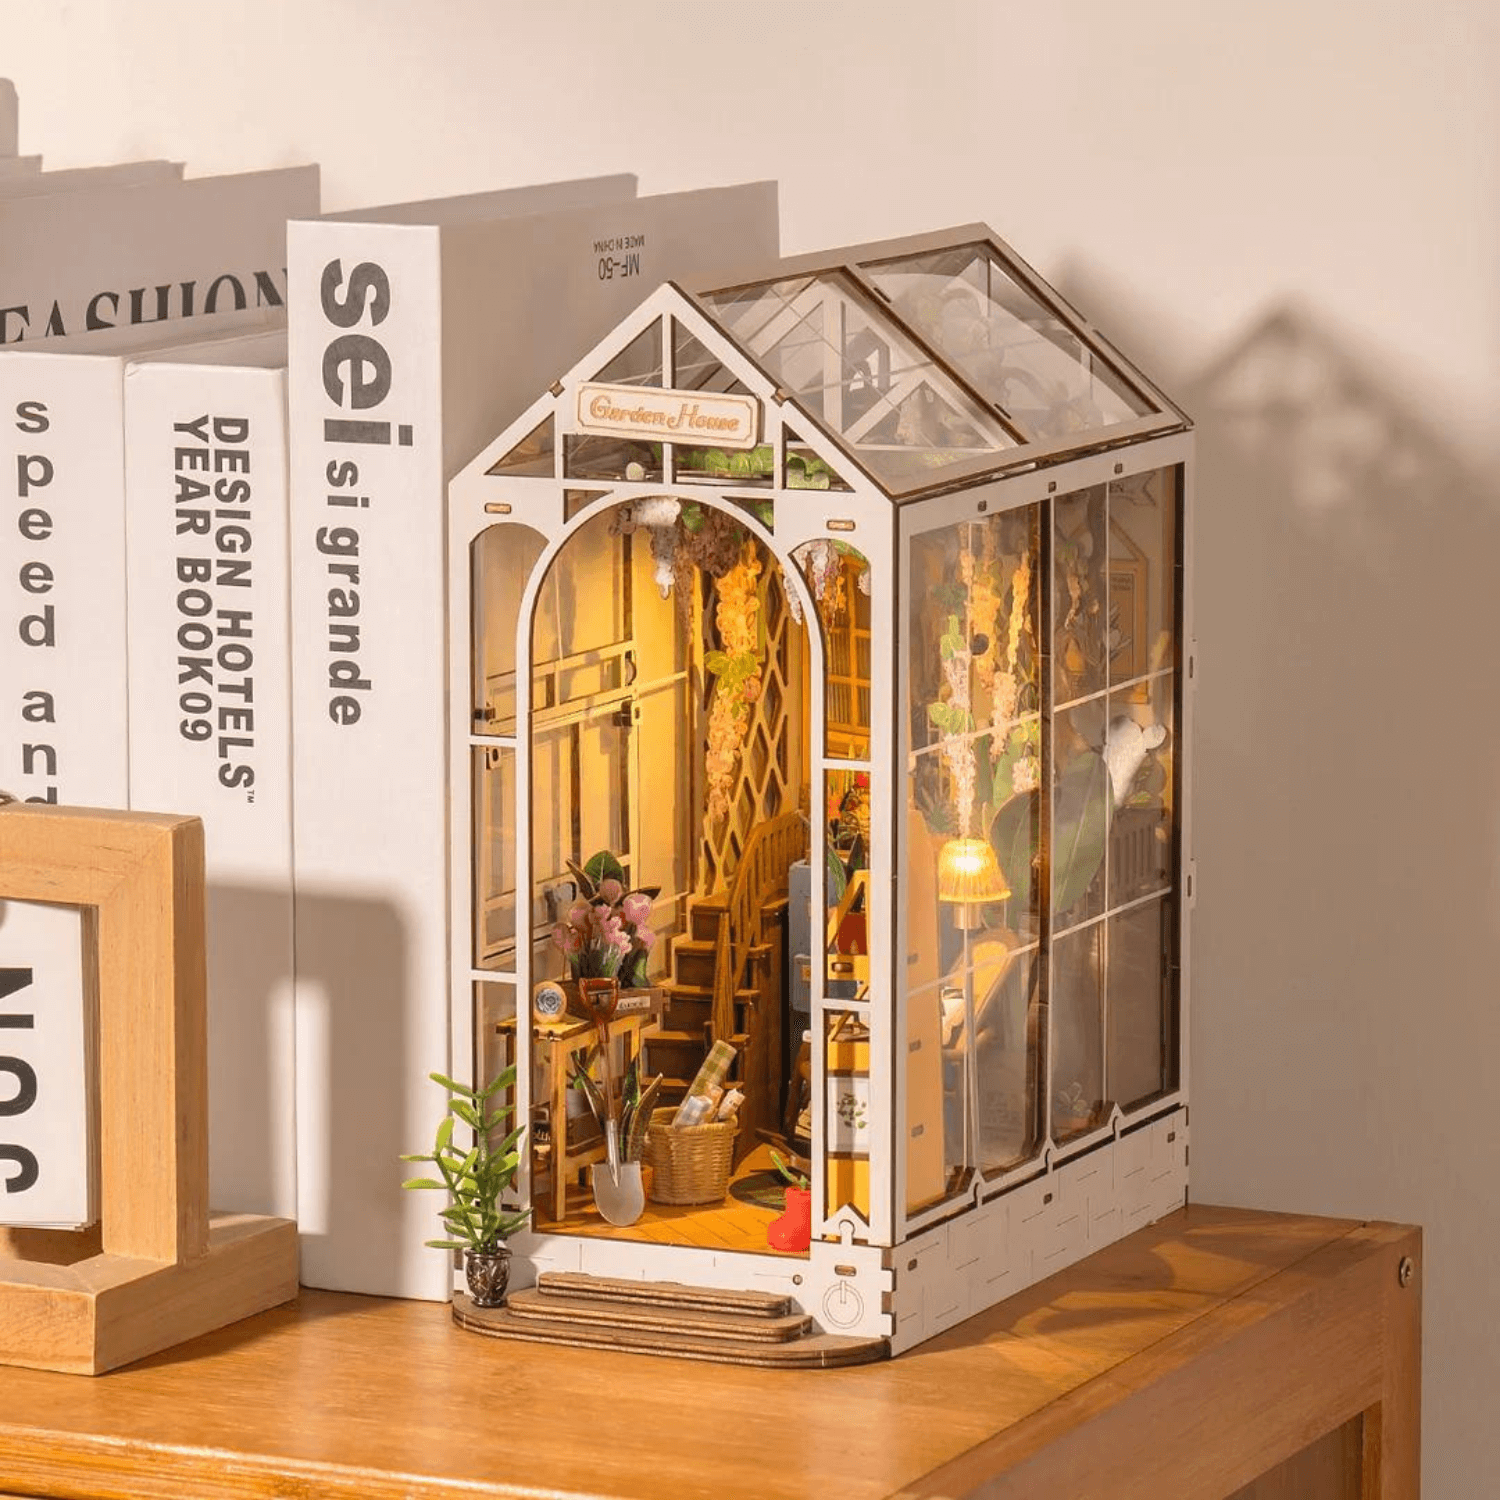 Diorama de cabane de jardin DIY - Le plaisir de bricoler